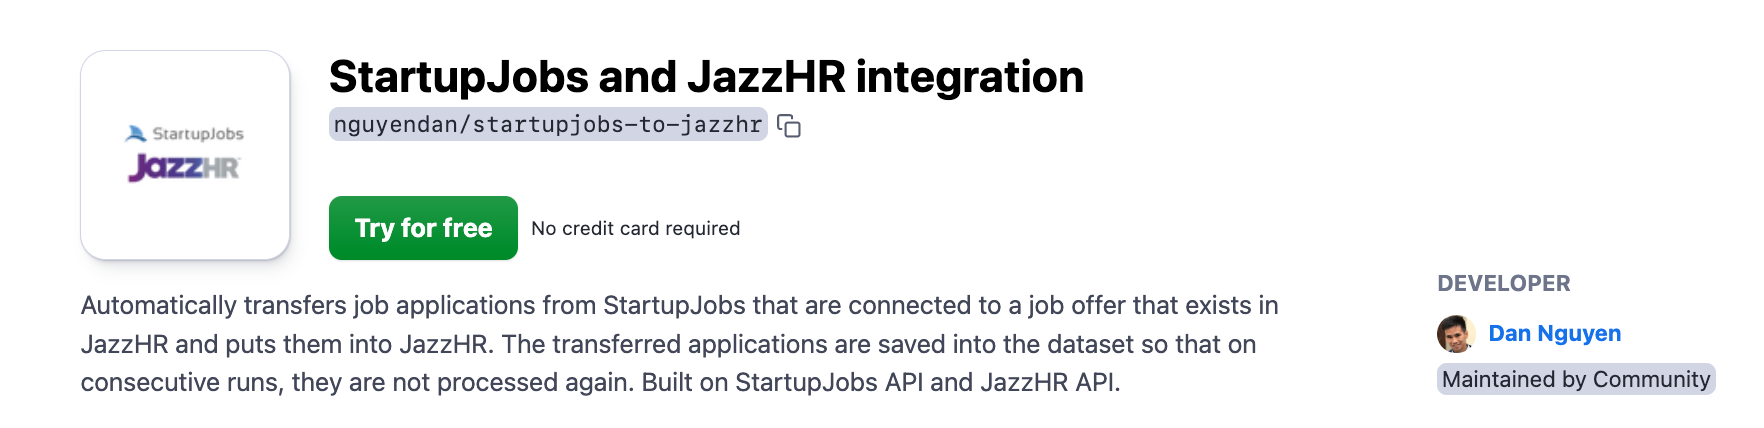 StartupJobs and JazzHR integration tool